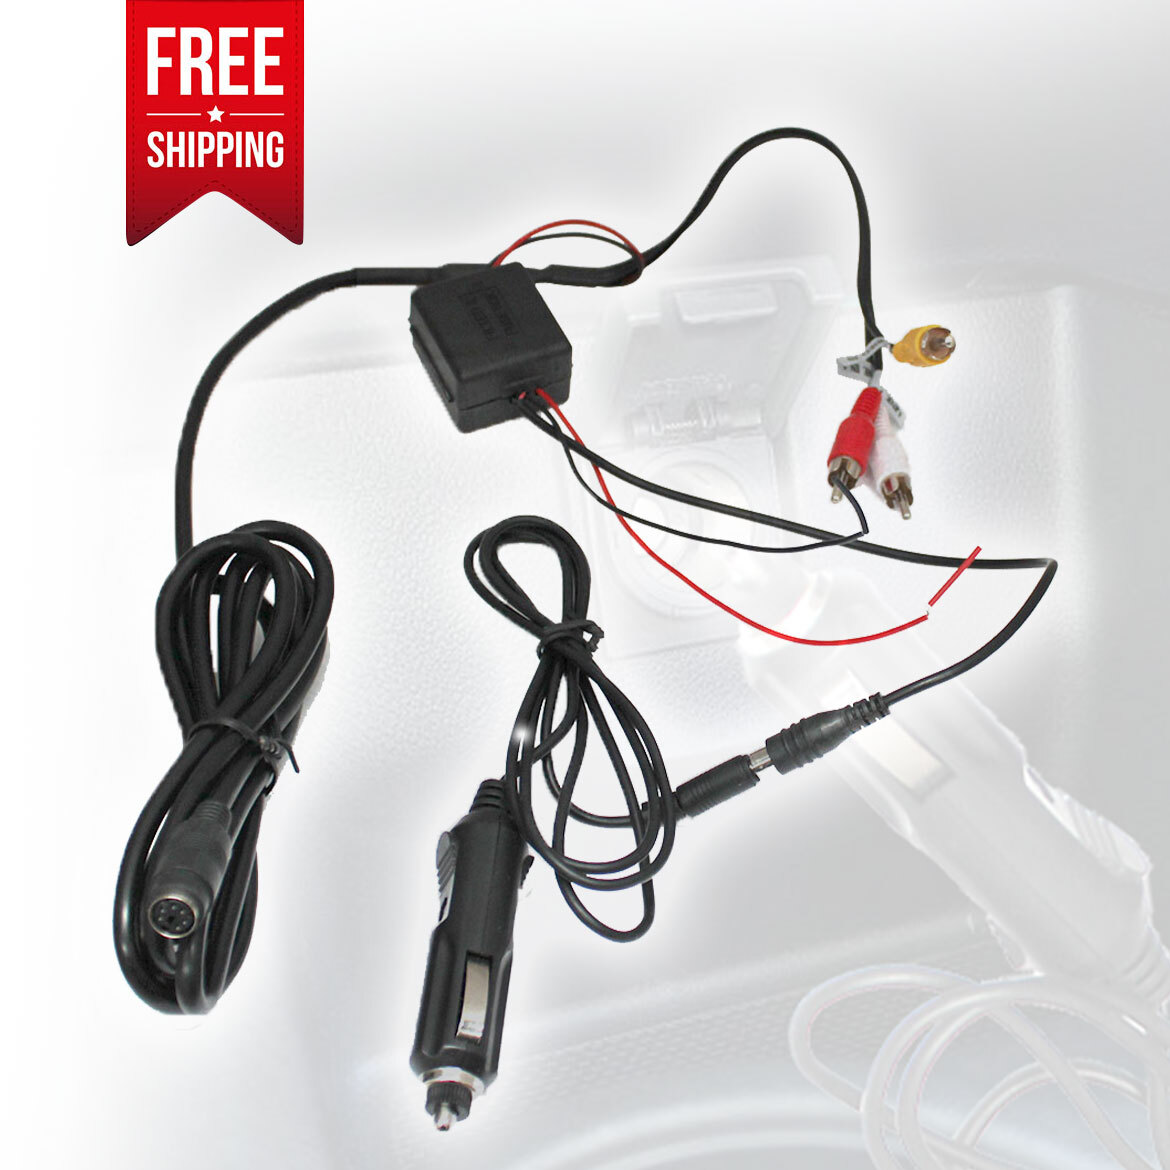 Elinz Car Cigarette Lighter Charger Power Supply For Headrest DVD Player